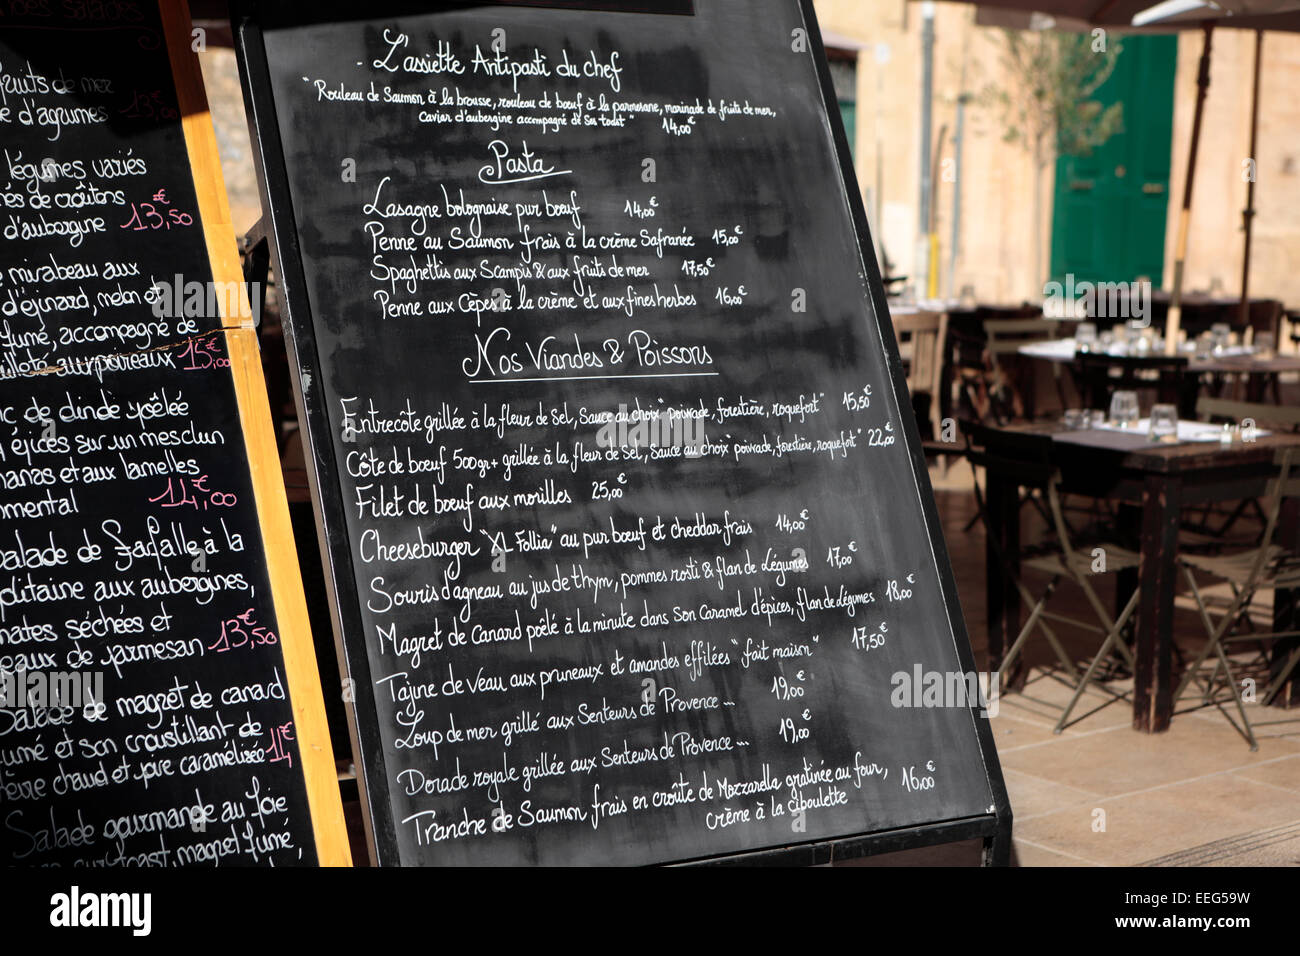 Paris restaurant menu board Stock Photo - Alamy